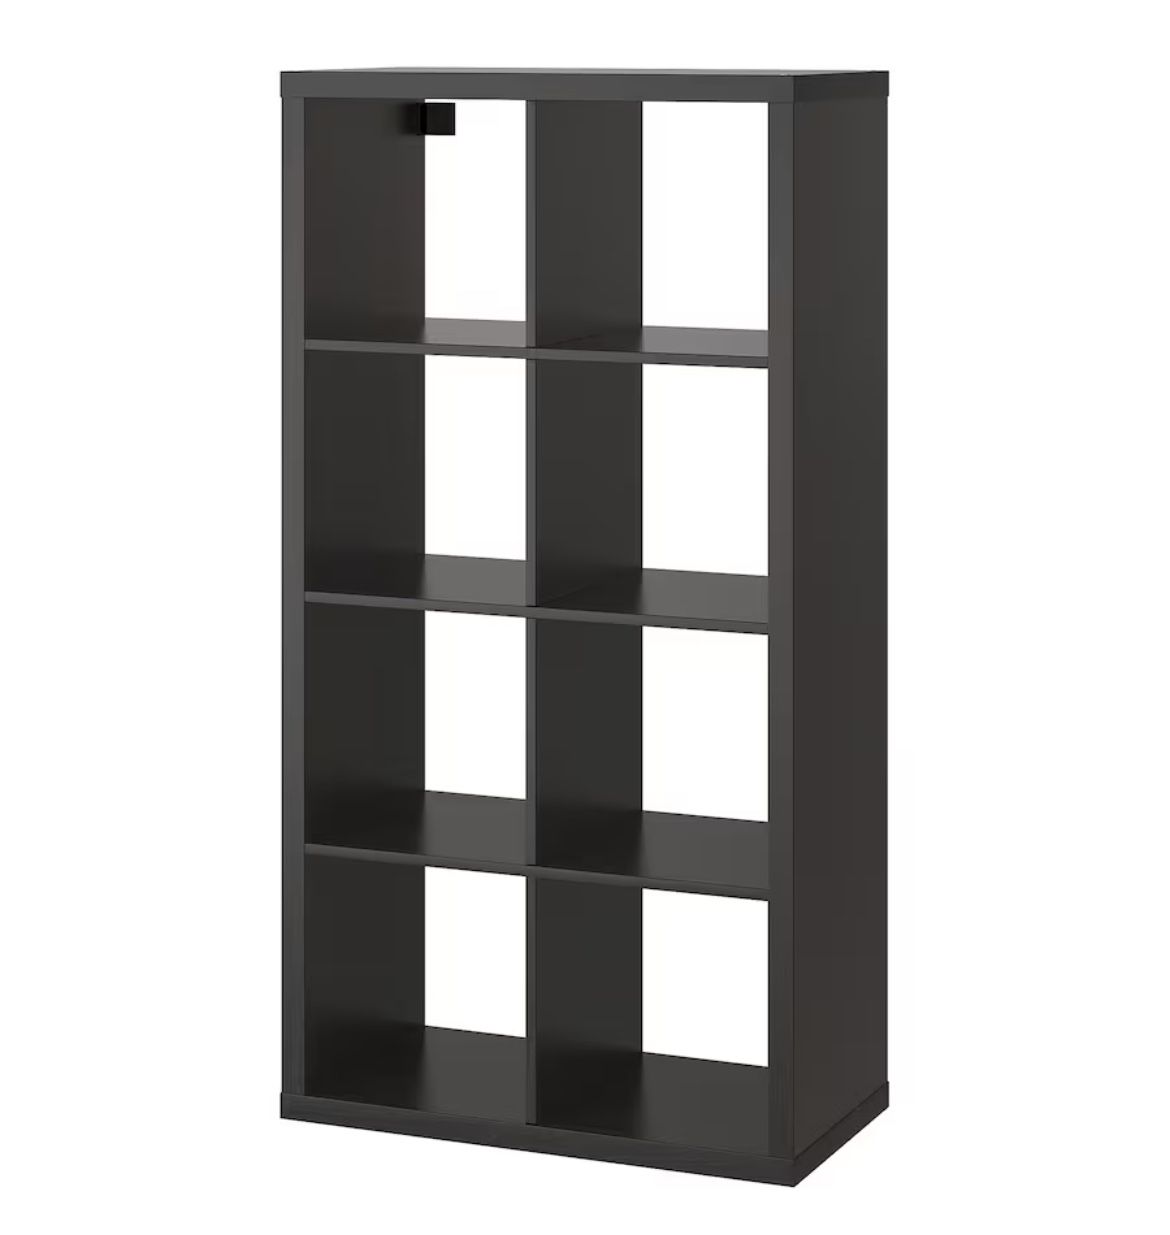 IKEA Kallax Bookshelf